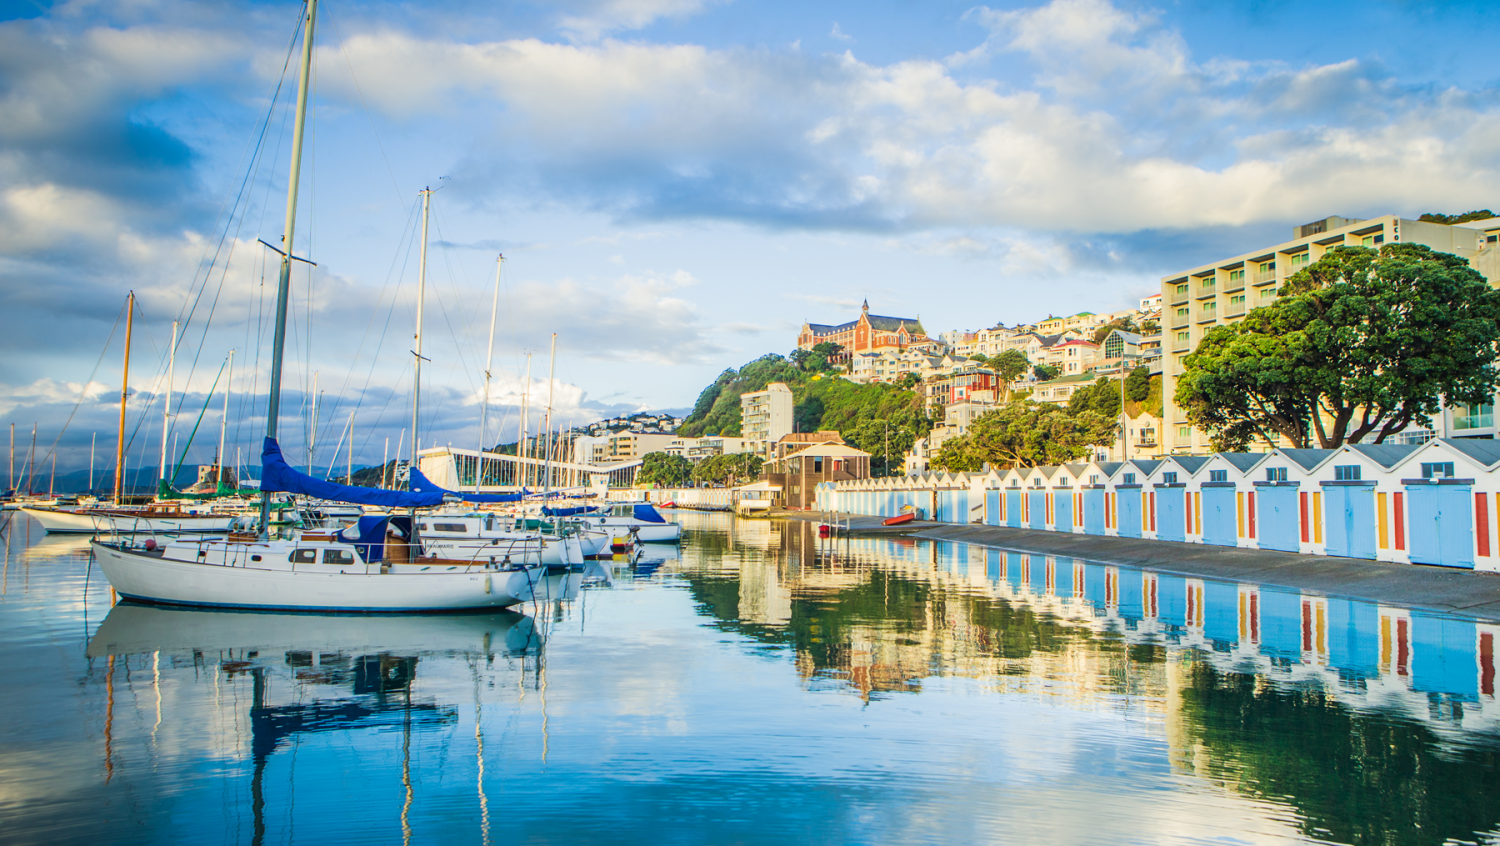 Image 1 for Wellington - The Coolest Little Capital!